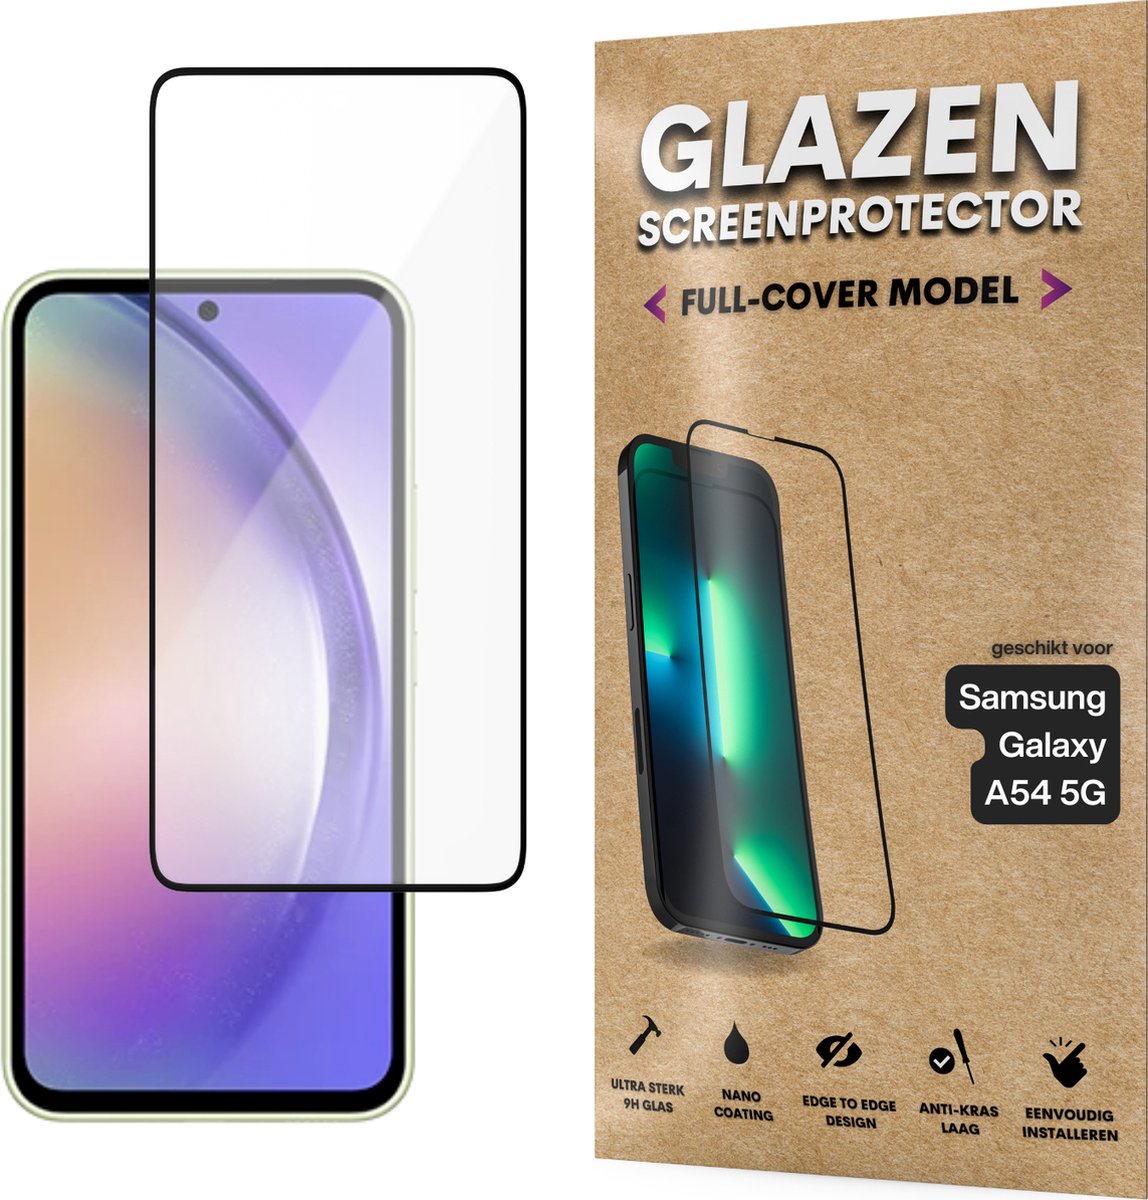 Screenprotector - Geschikt voor Samsung Galaxy A54 5G - Gehard Glas - Full Cover Tempered Glass - Case Friendly